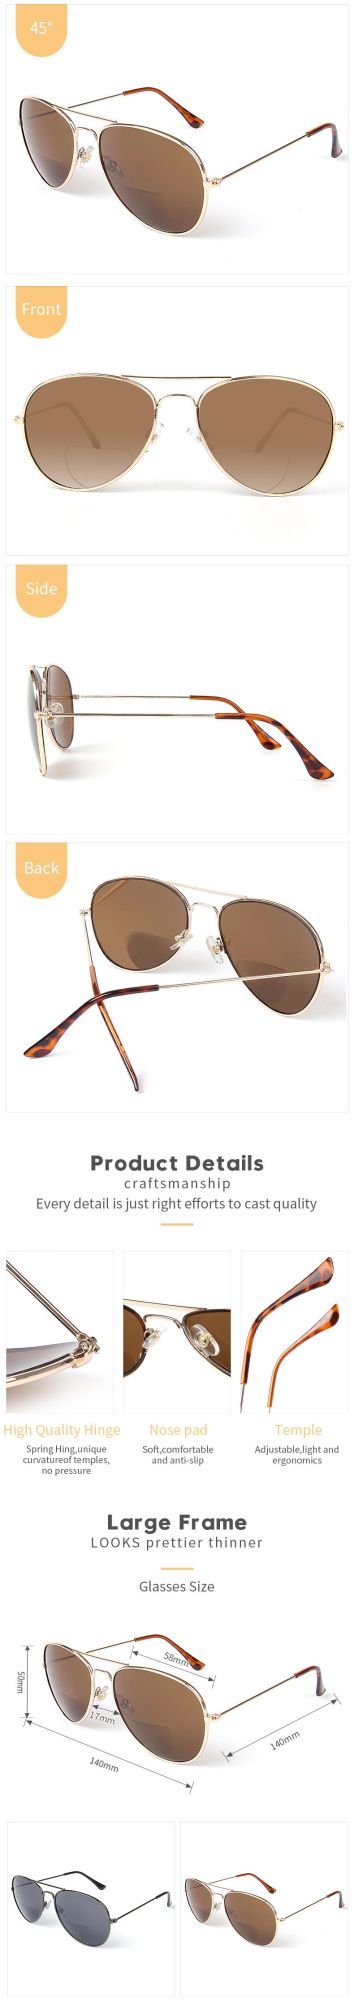 New Style Polarized Sunglasses for Driving Cars Unisex Trendy Sun Glasses Eyewear Wholesale